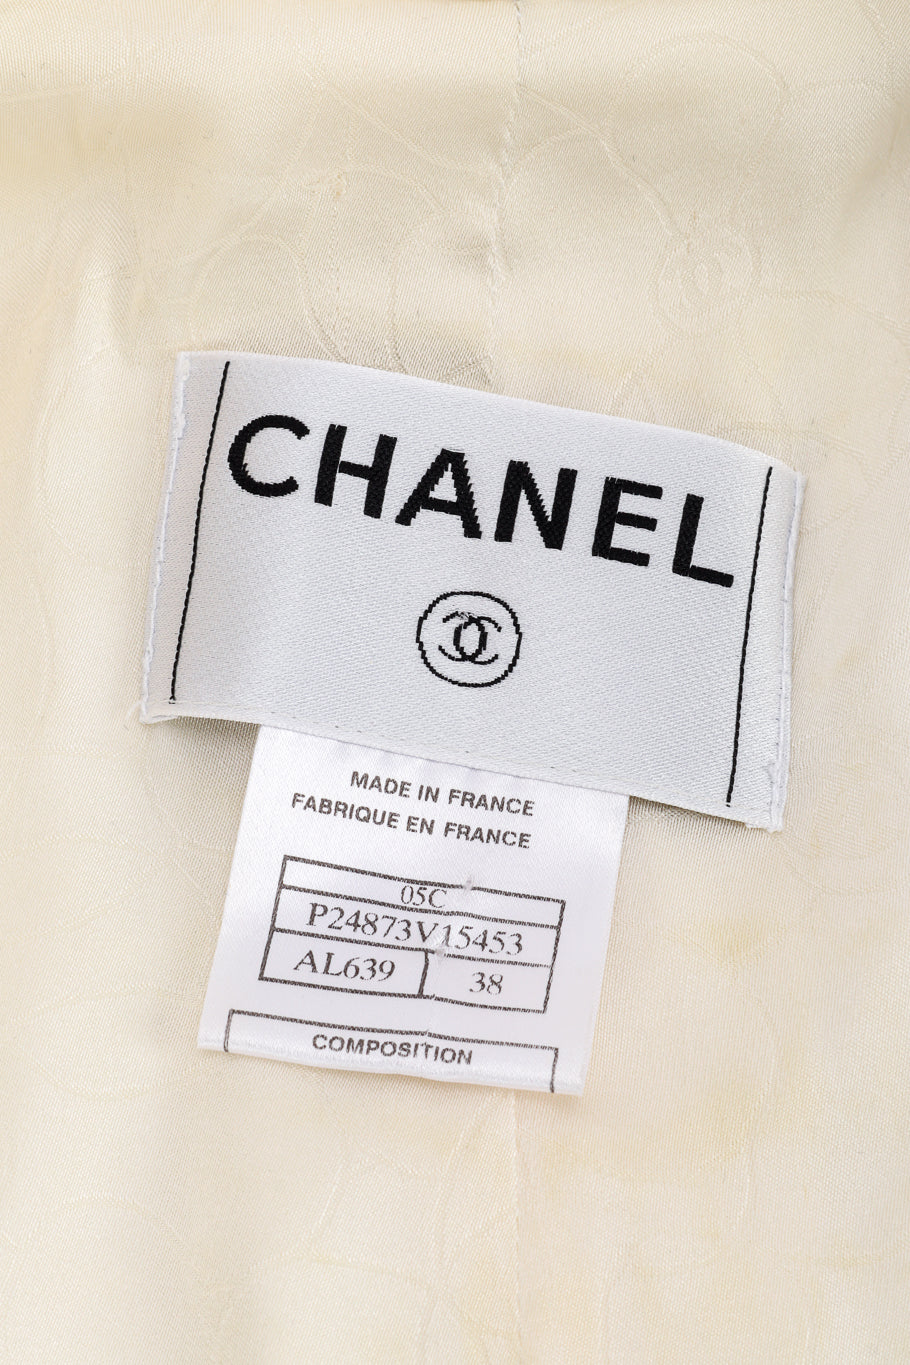 Vintage Chanel 2005 Cruise Woven Skirt Suit jacket signature label @recessla